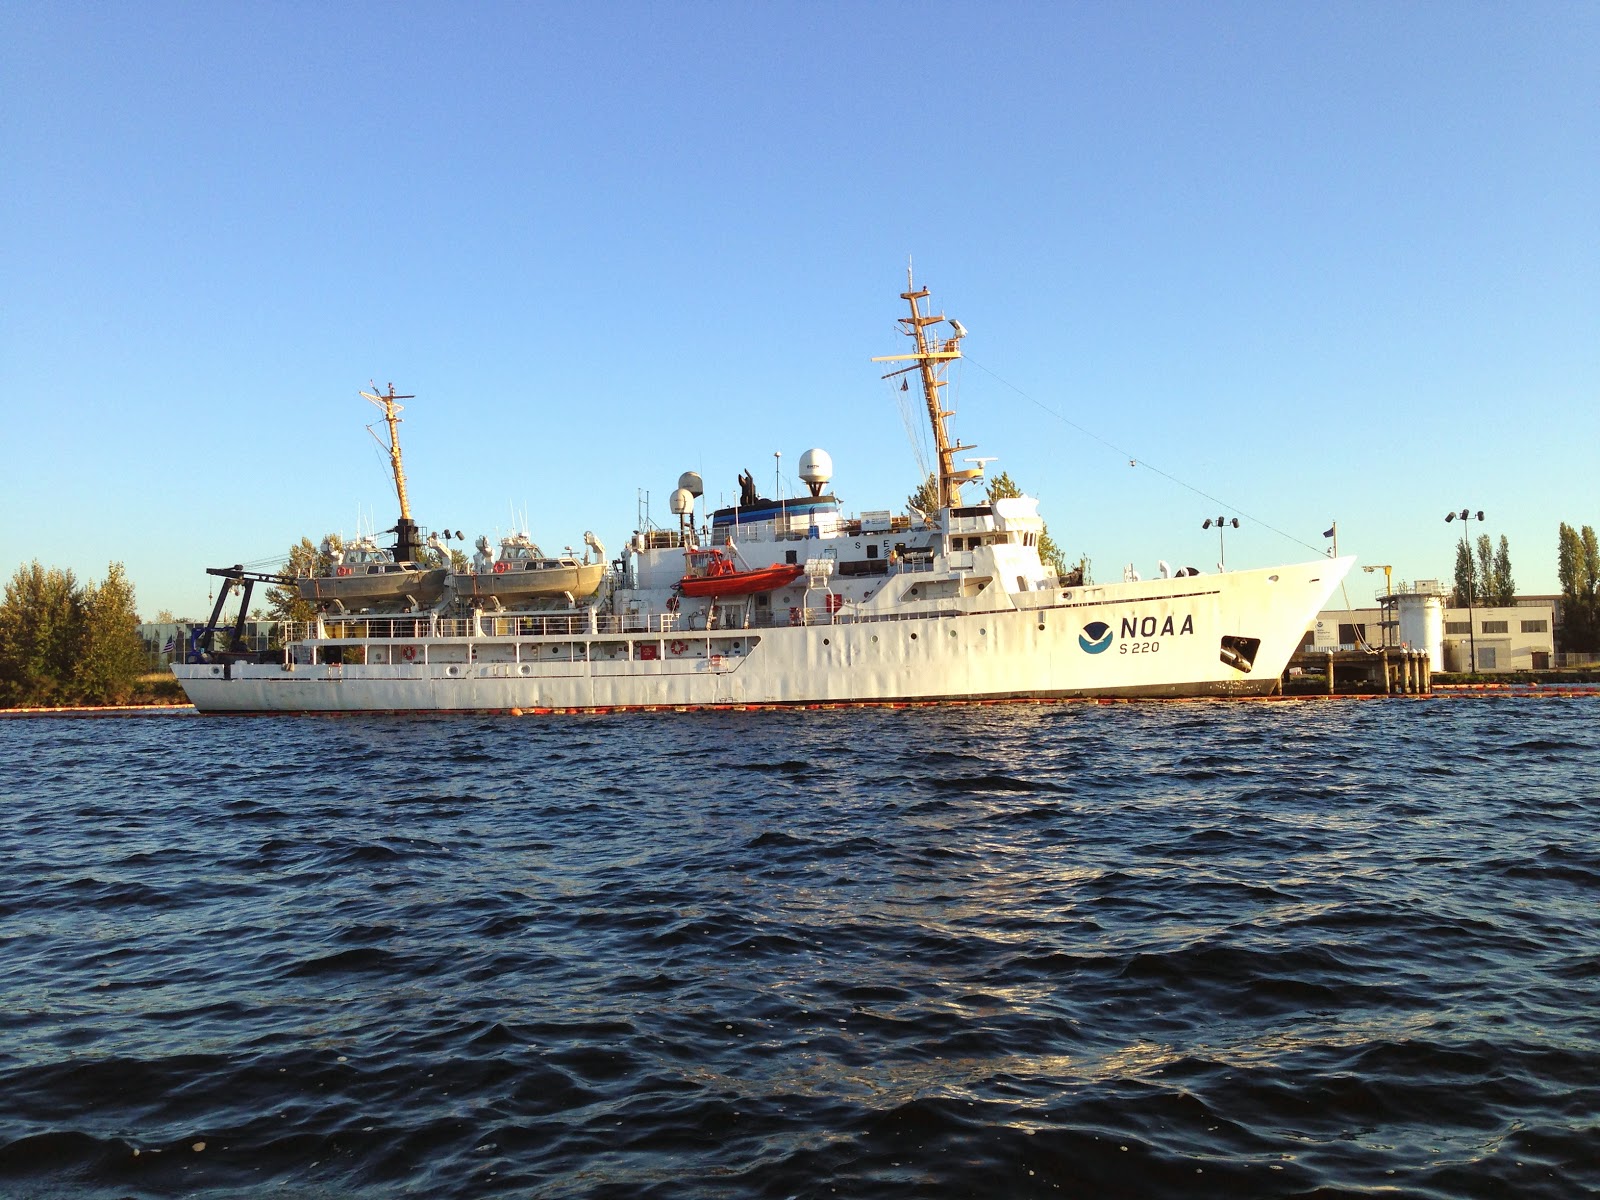 The NOAA Fairweather Hydrographic Survey Vessel